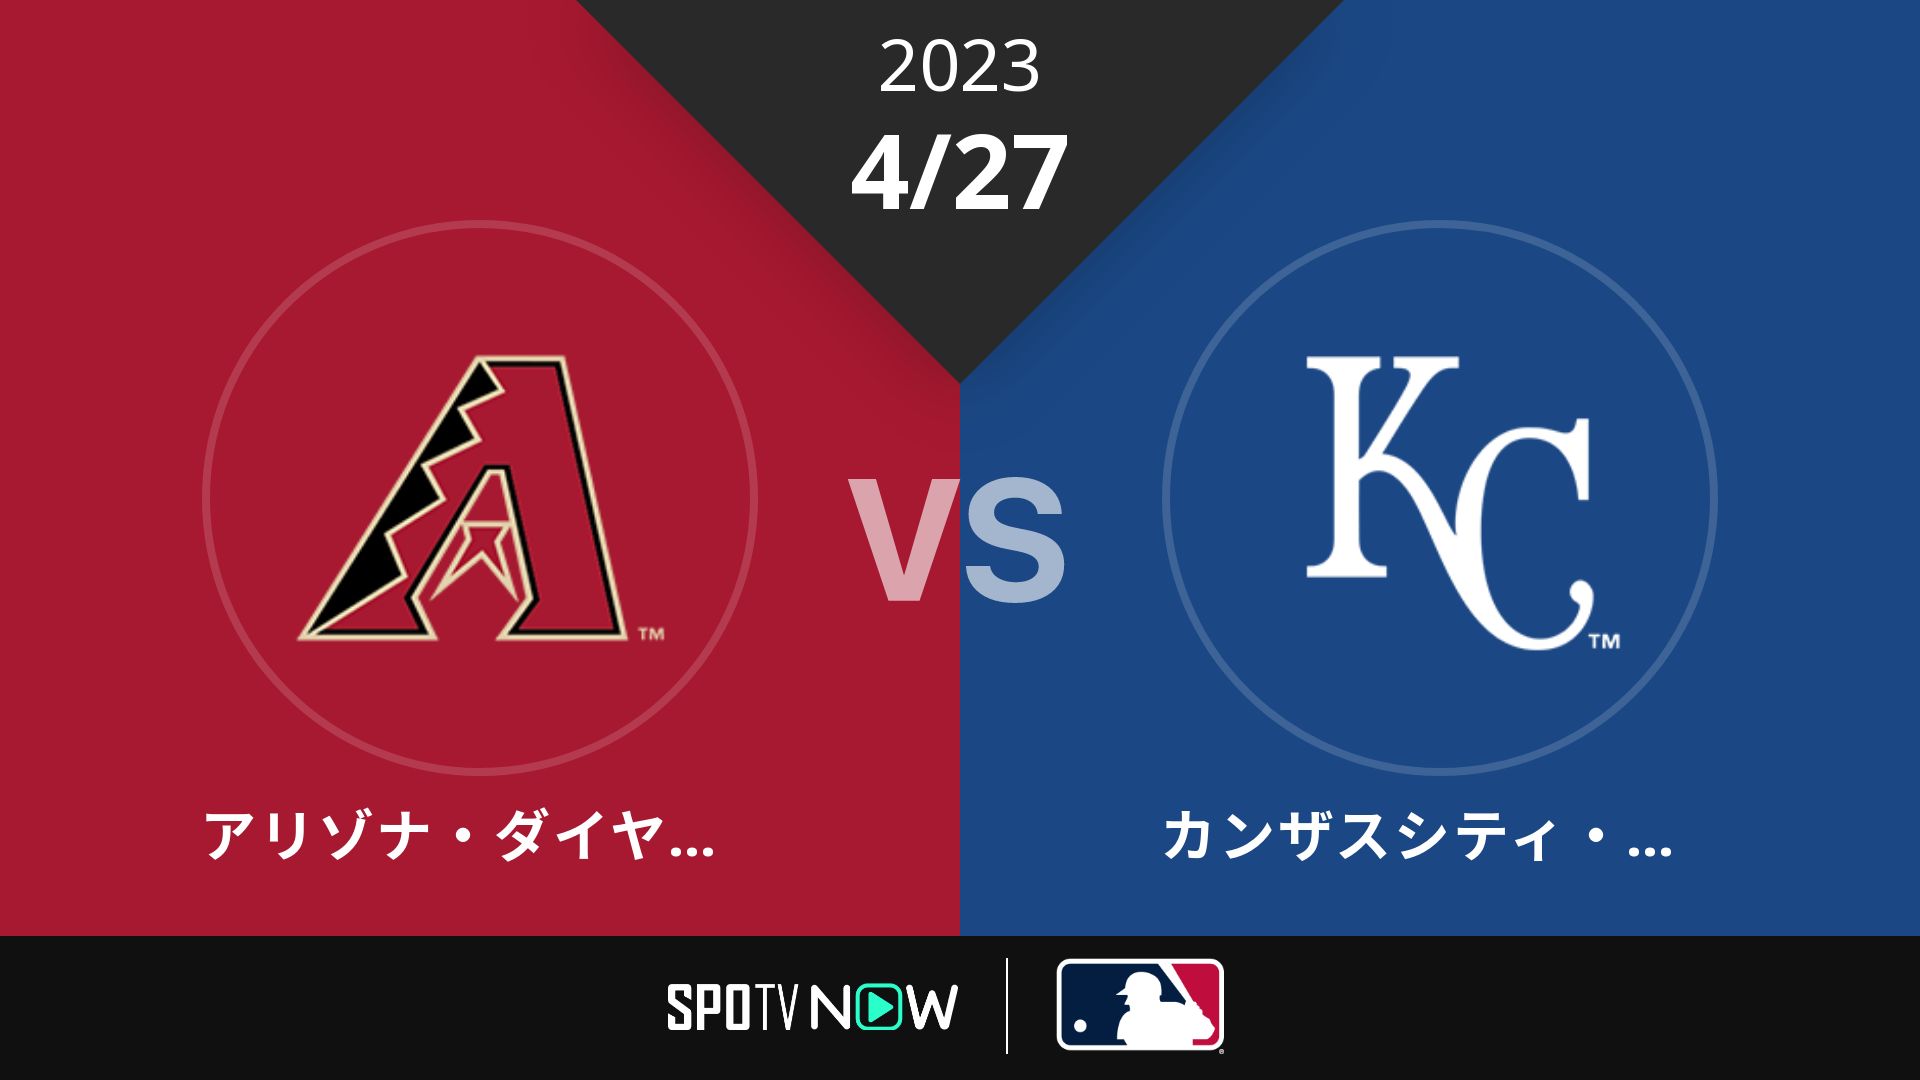 2023/4/27 Dバックス vs ロイヤルズ [MLB]